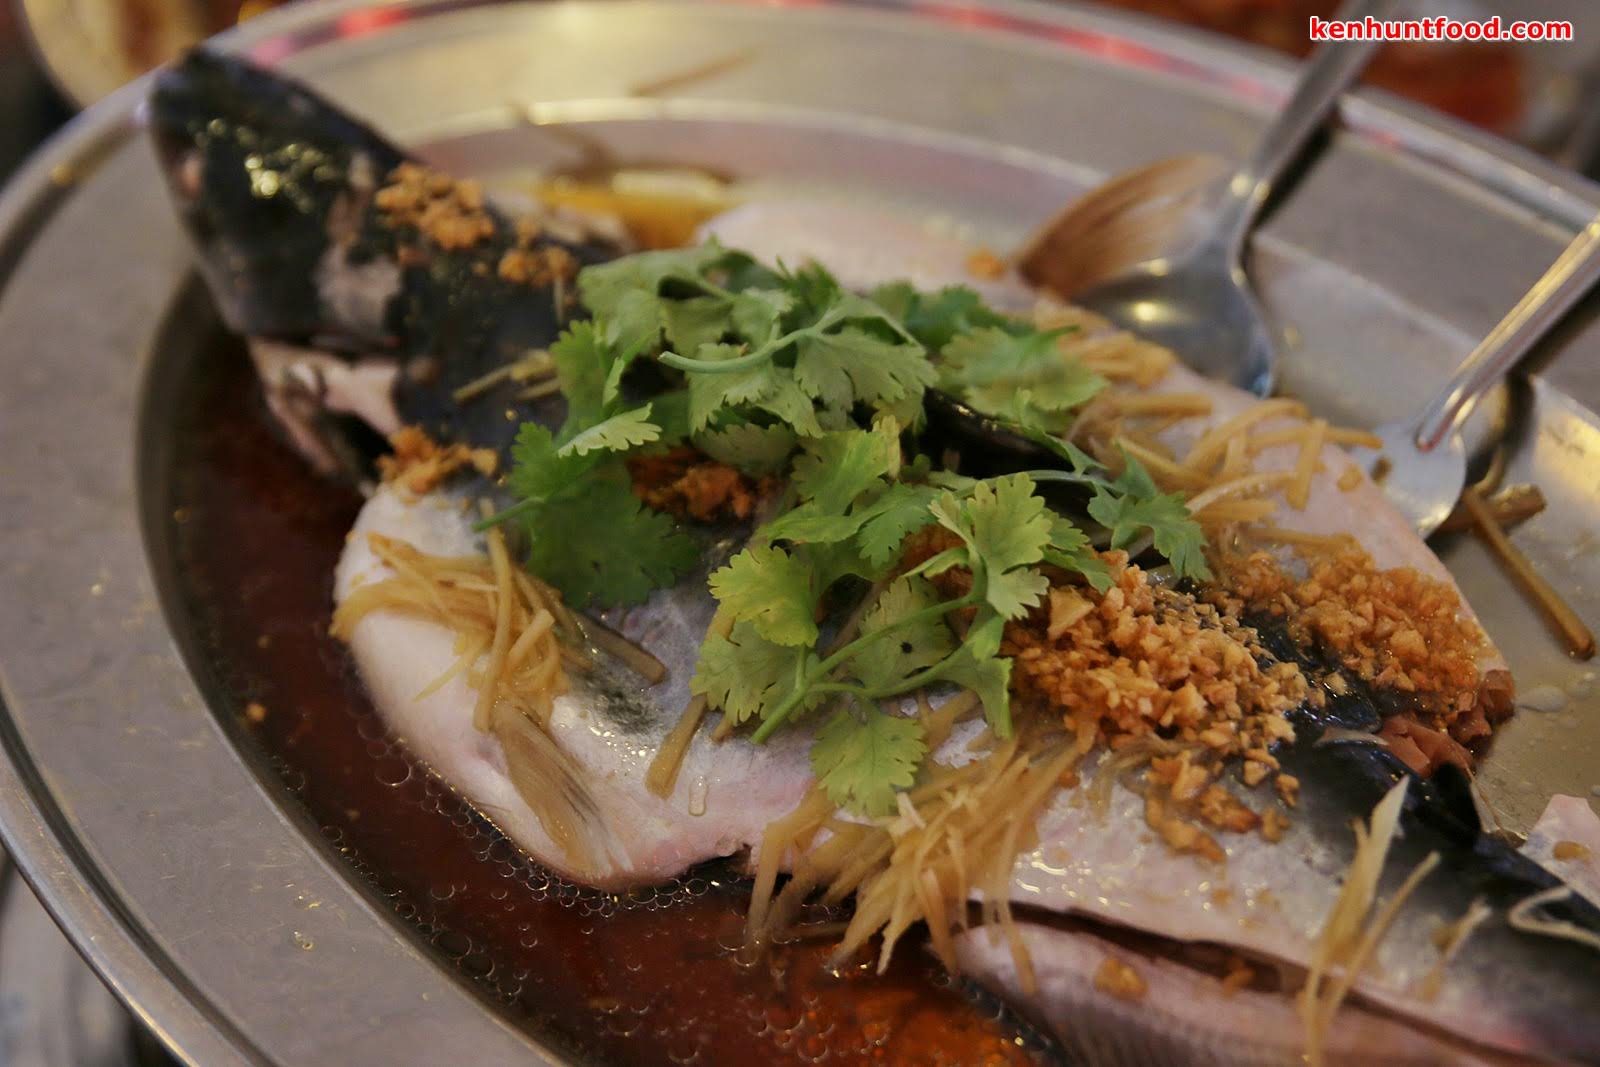 Ken Hunts Food: DZH Fish Village 山水鱼庄餐厅 @ Gohtong Jaya ...